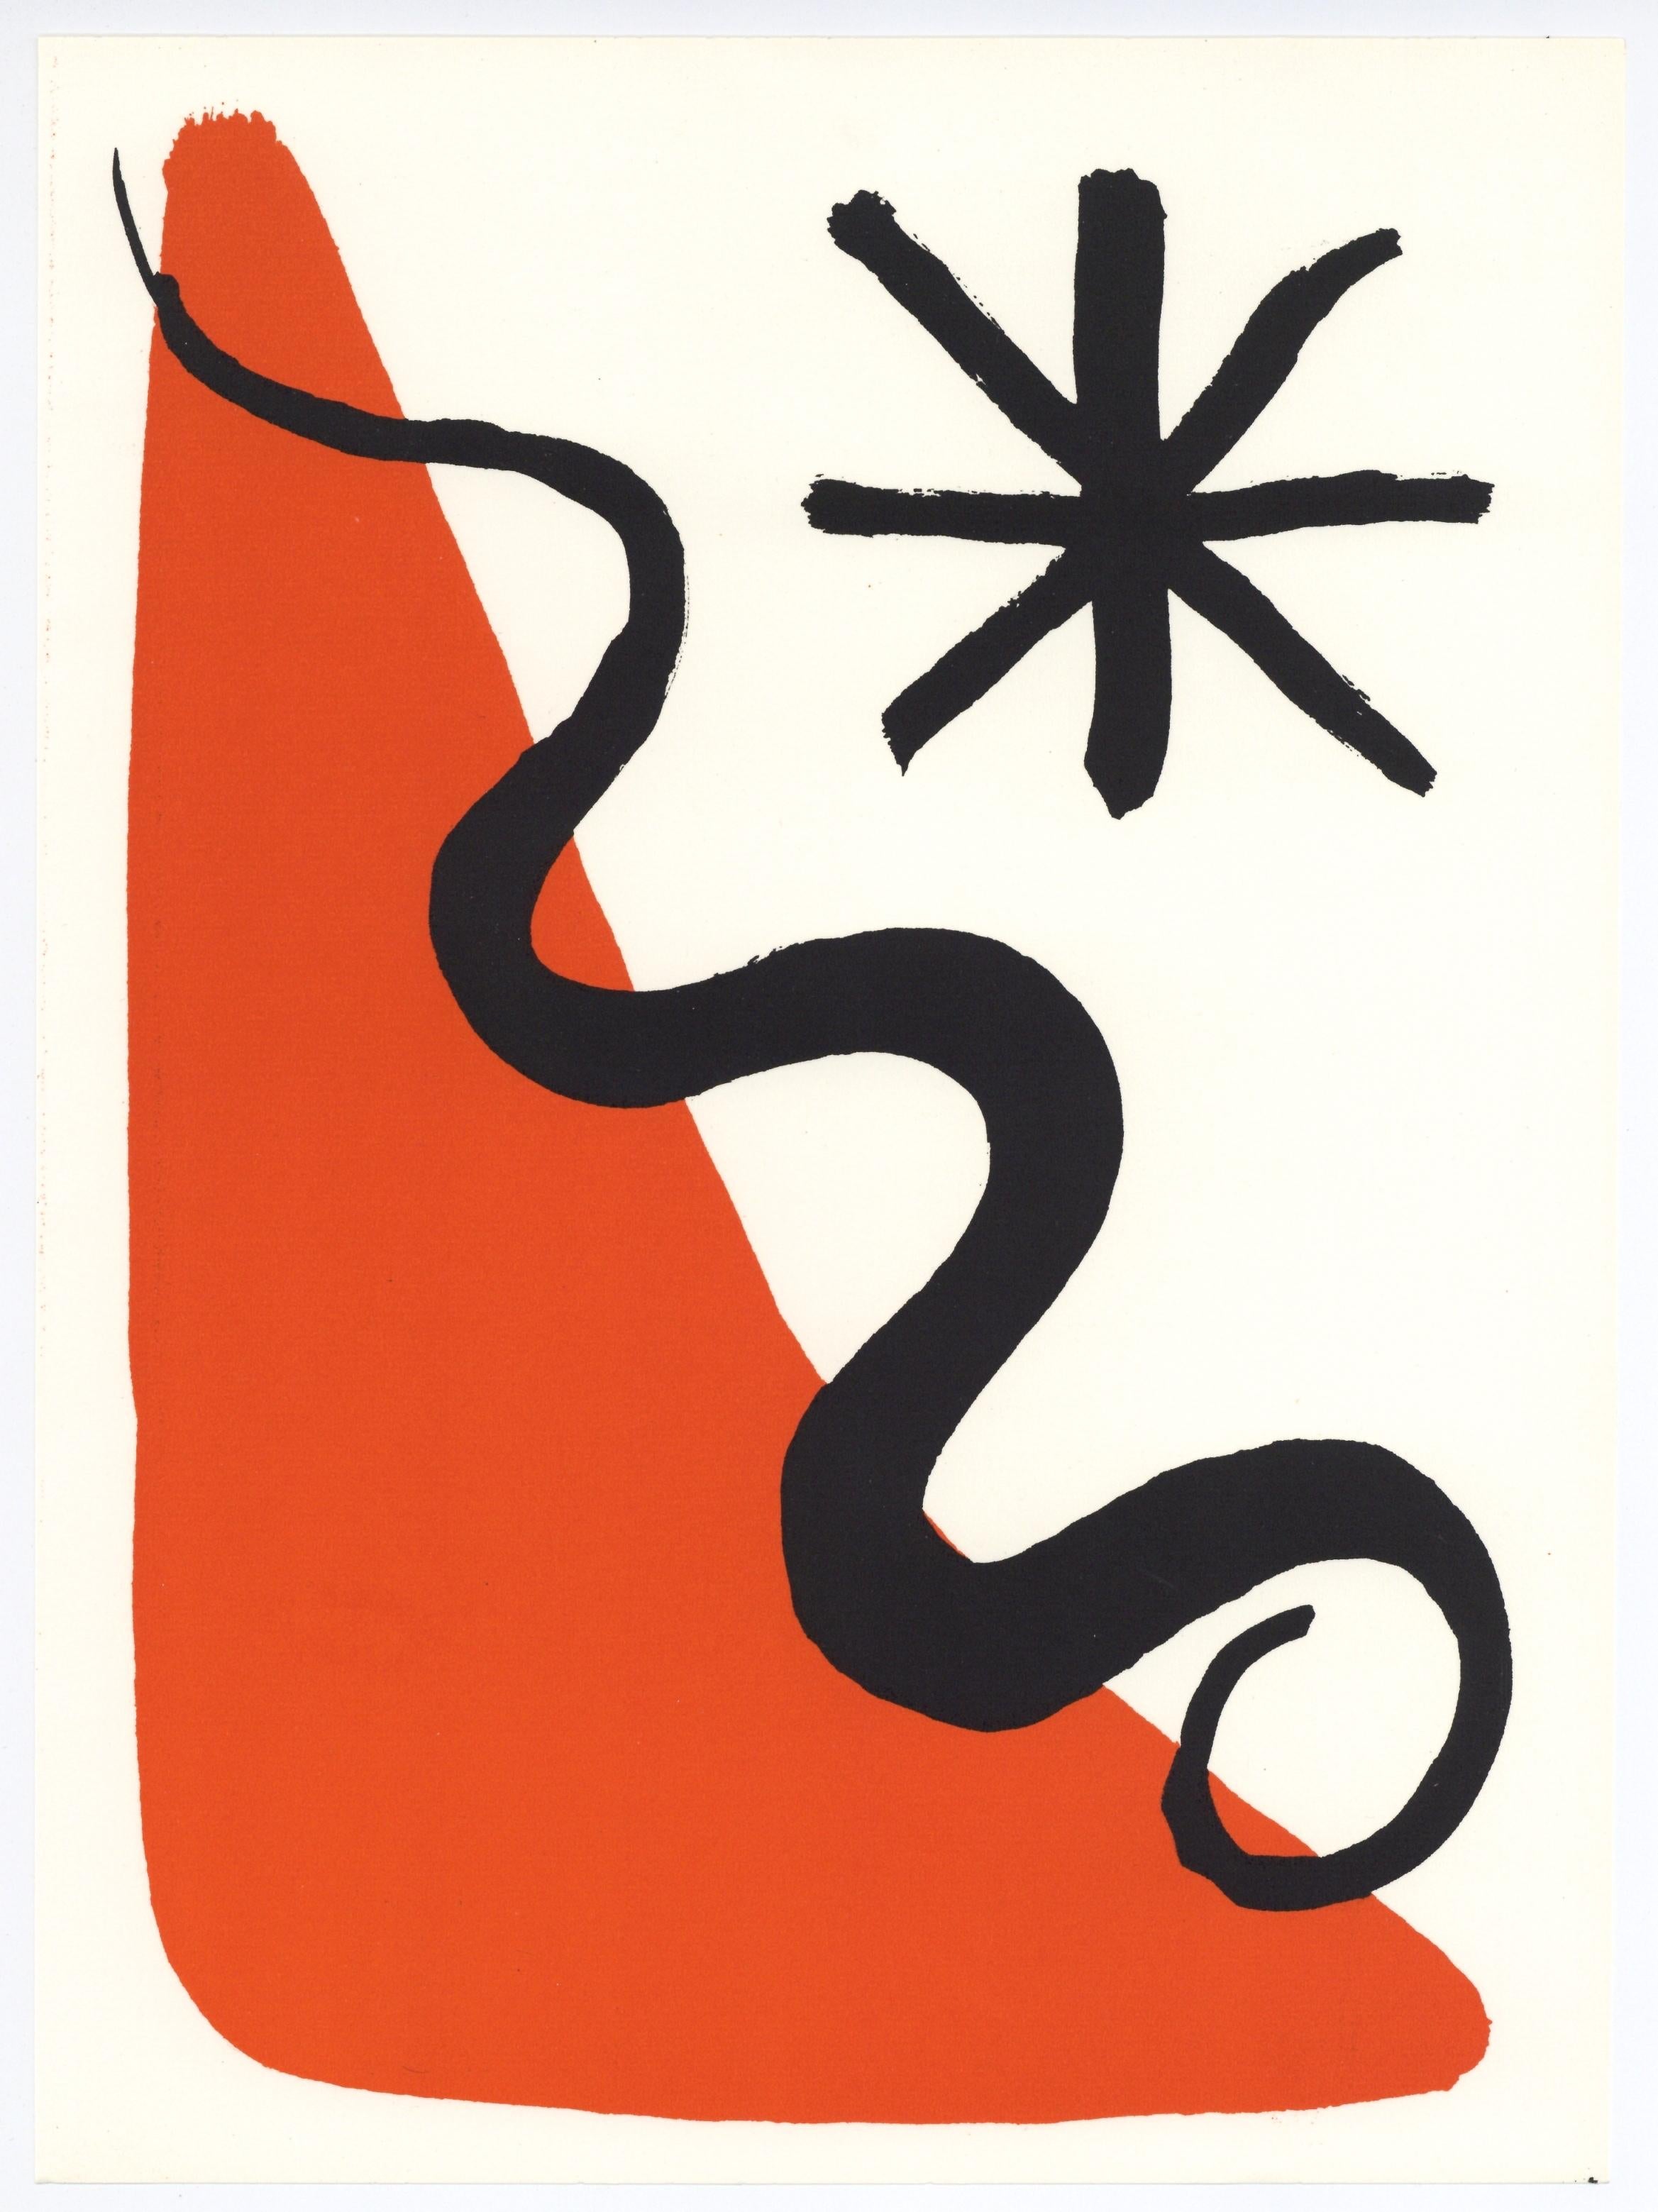 What did Alexander Calder invent?